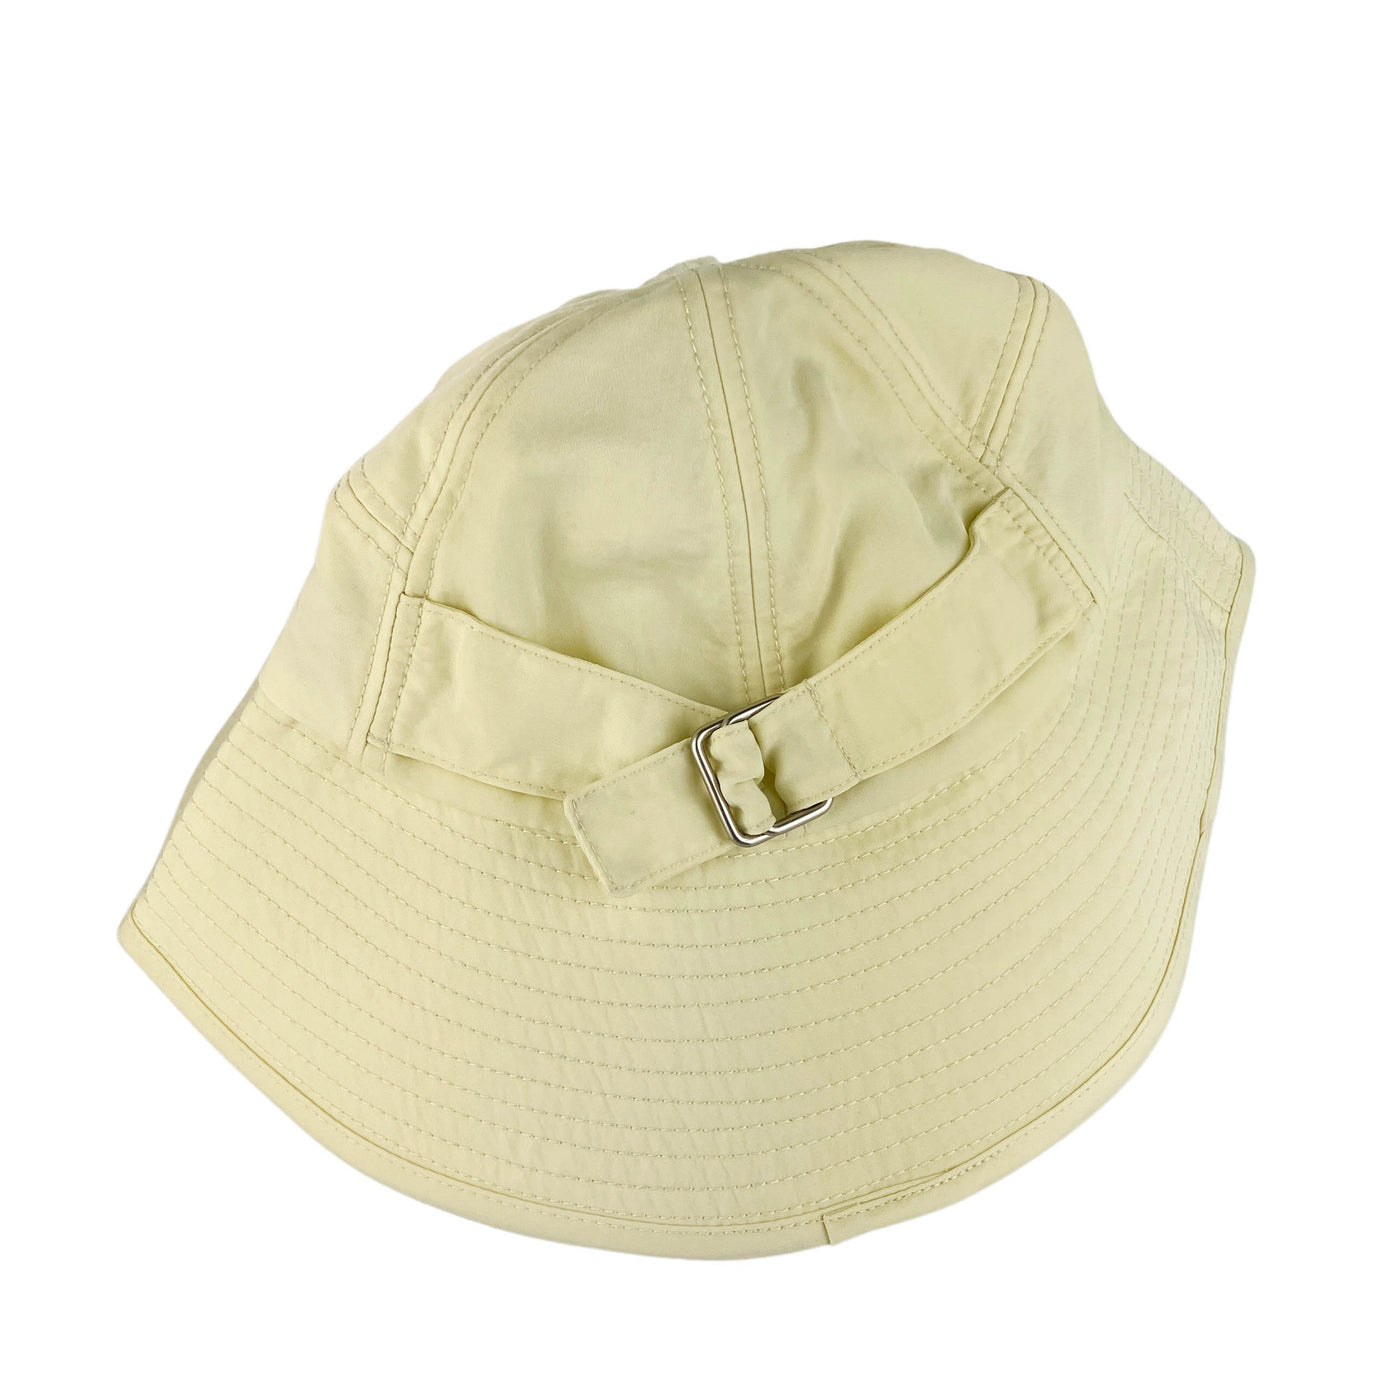 Saturdays Nylon Fishing Hat in Pear Sorbet - Discounts on Saturdays NYC at UAL